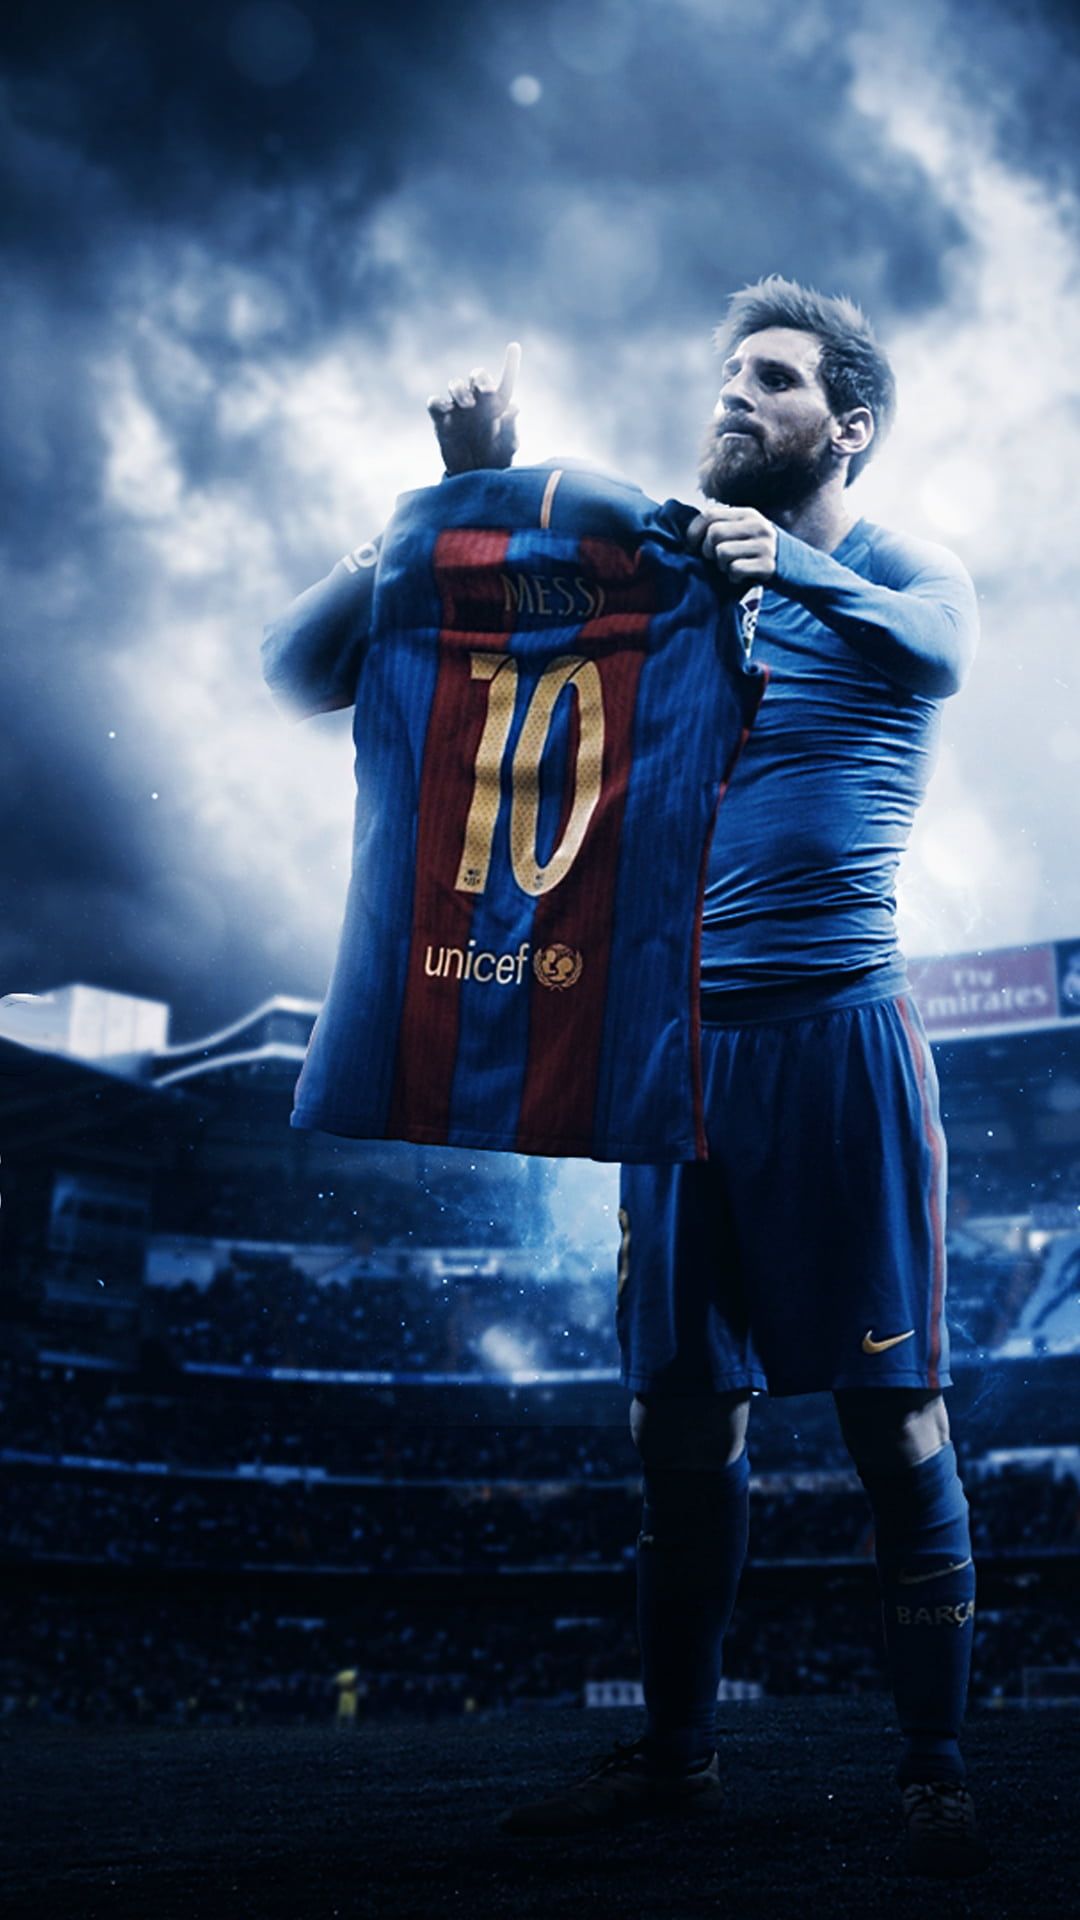 FC Barcelona camiseta 10